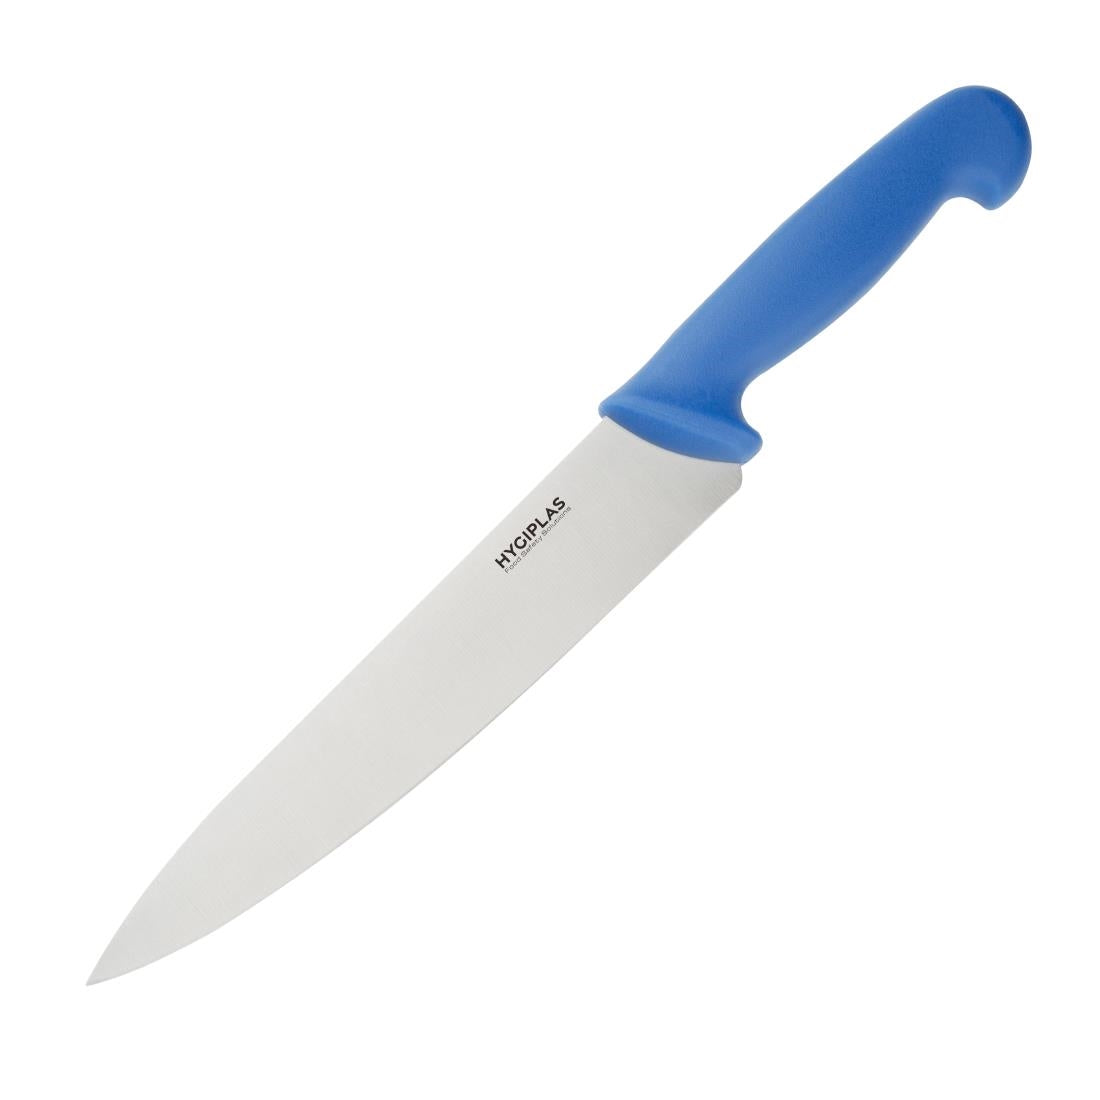 C851 Hygiplas Chefs Knife Blue 21.5cm JD Catering Equipment Solutions Ltd